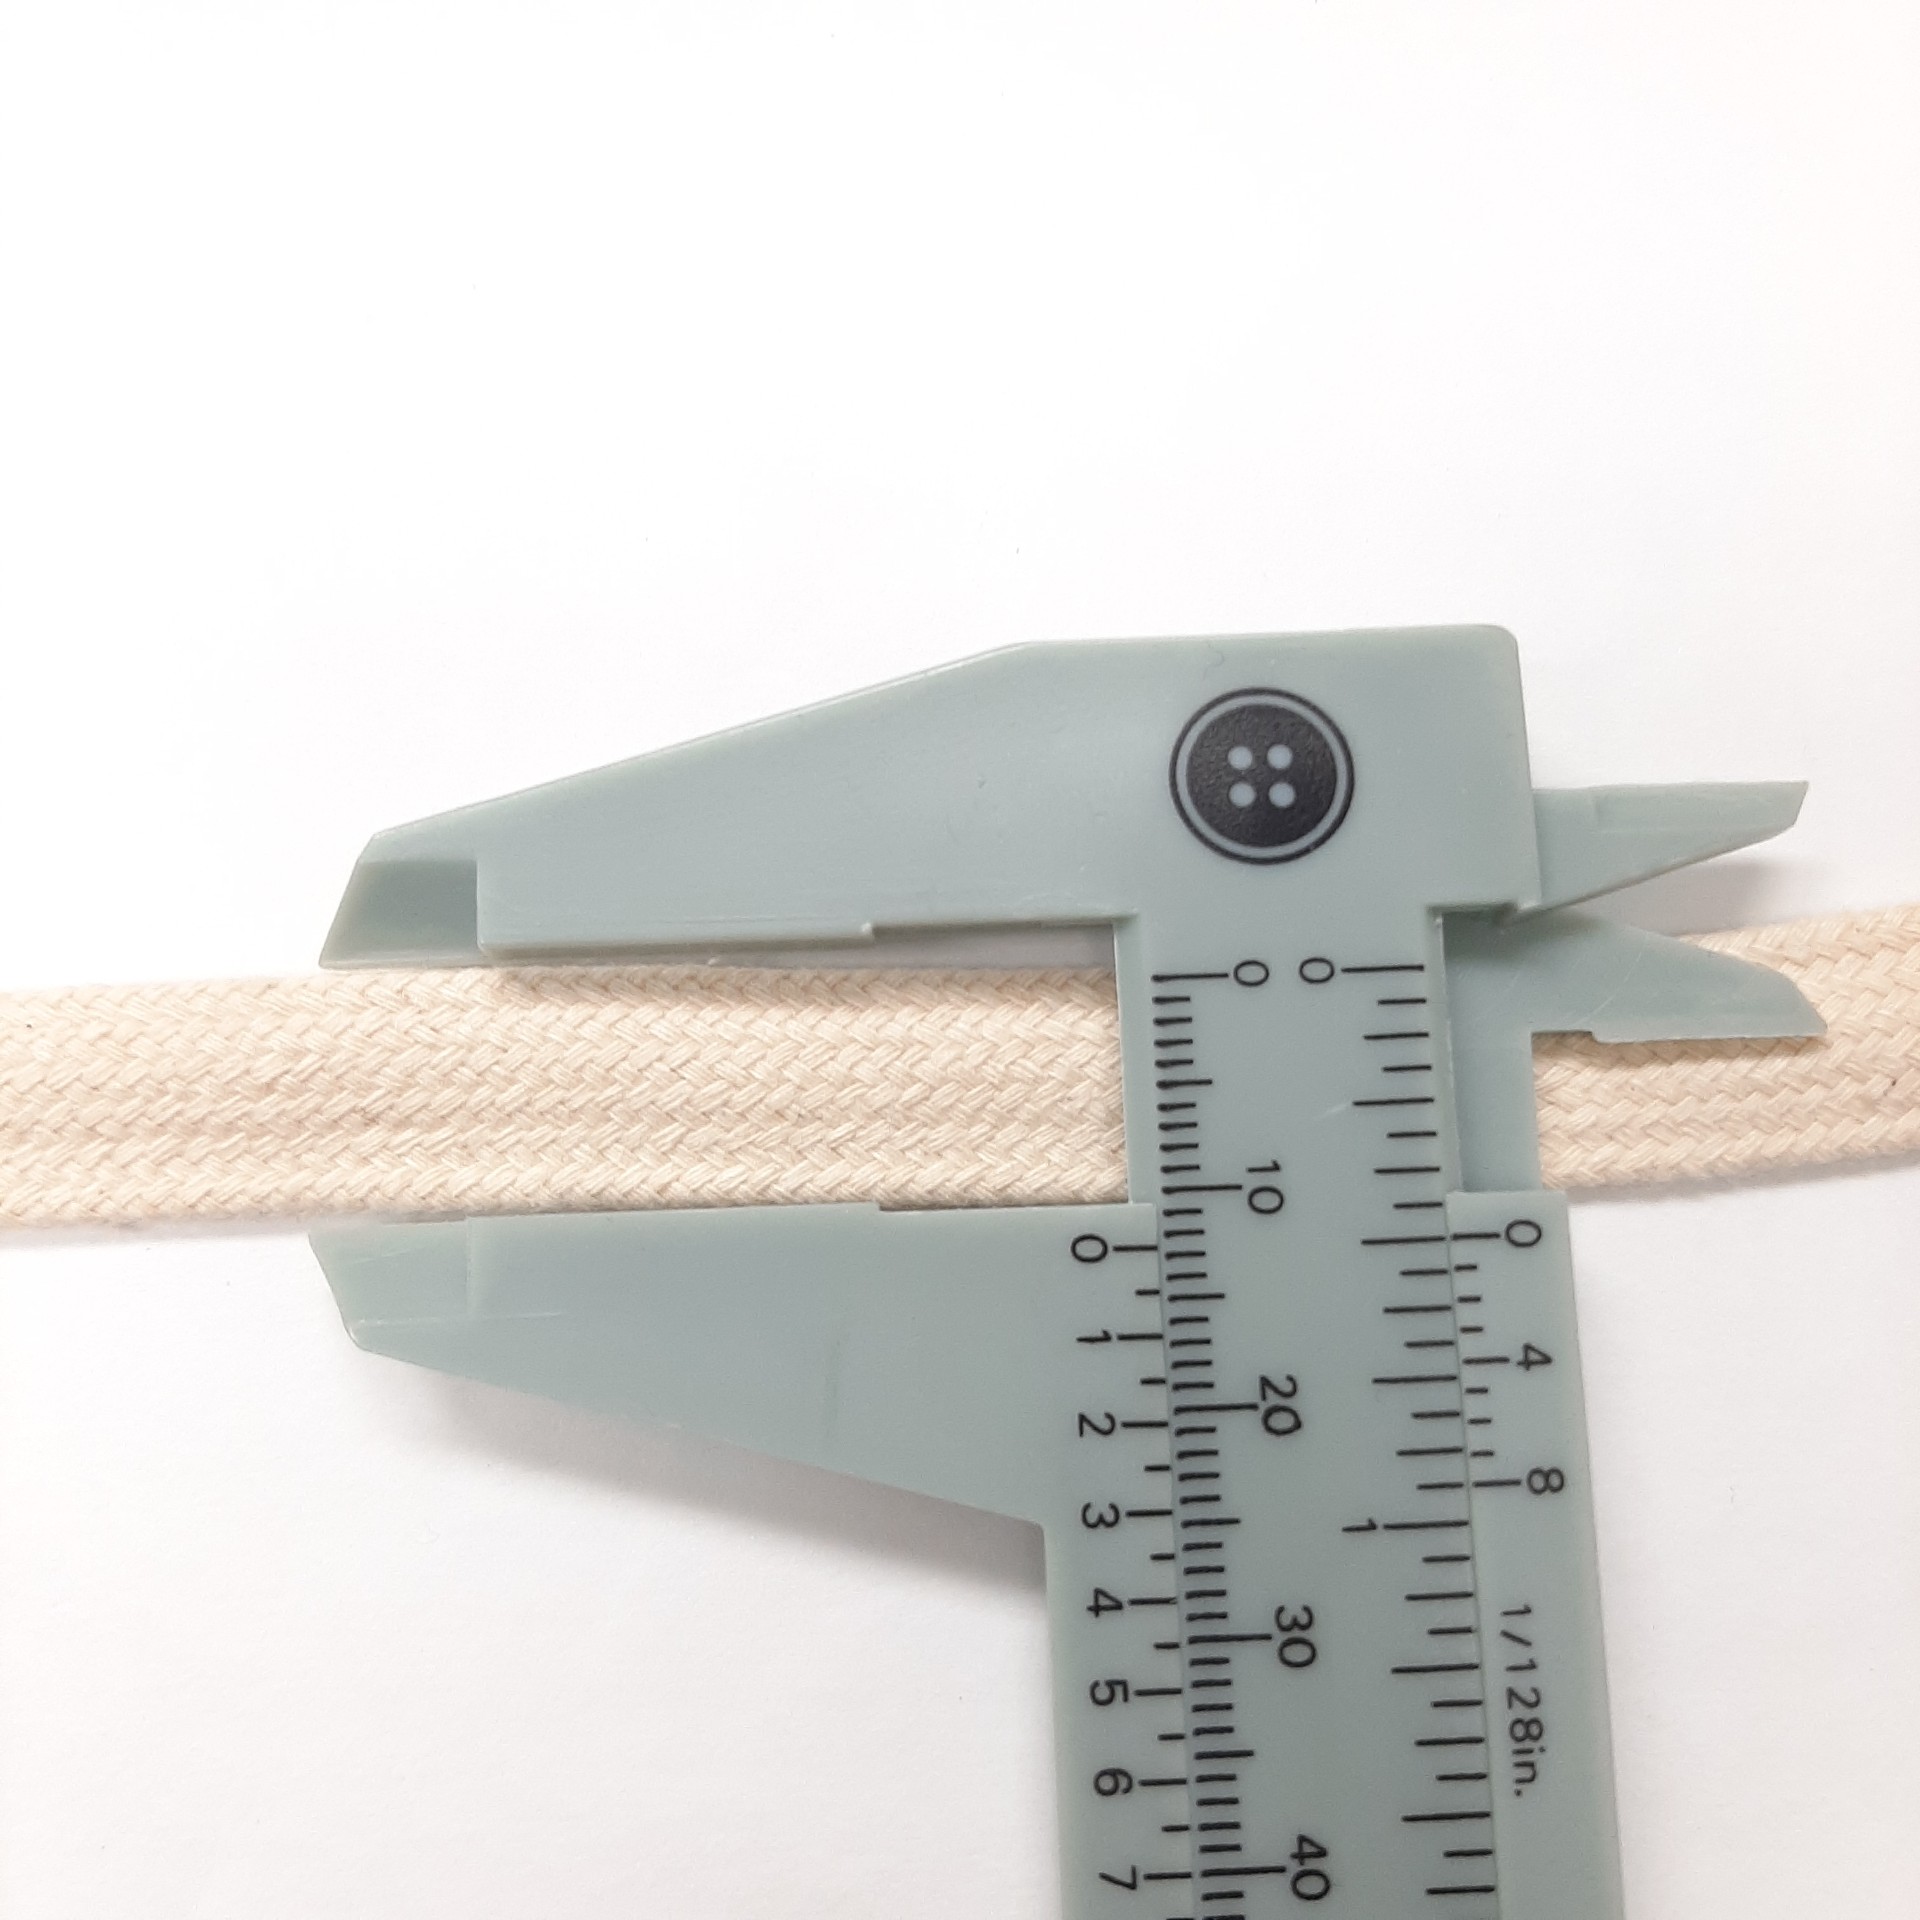 0.5 inch flat cord (1).jpg